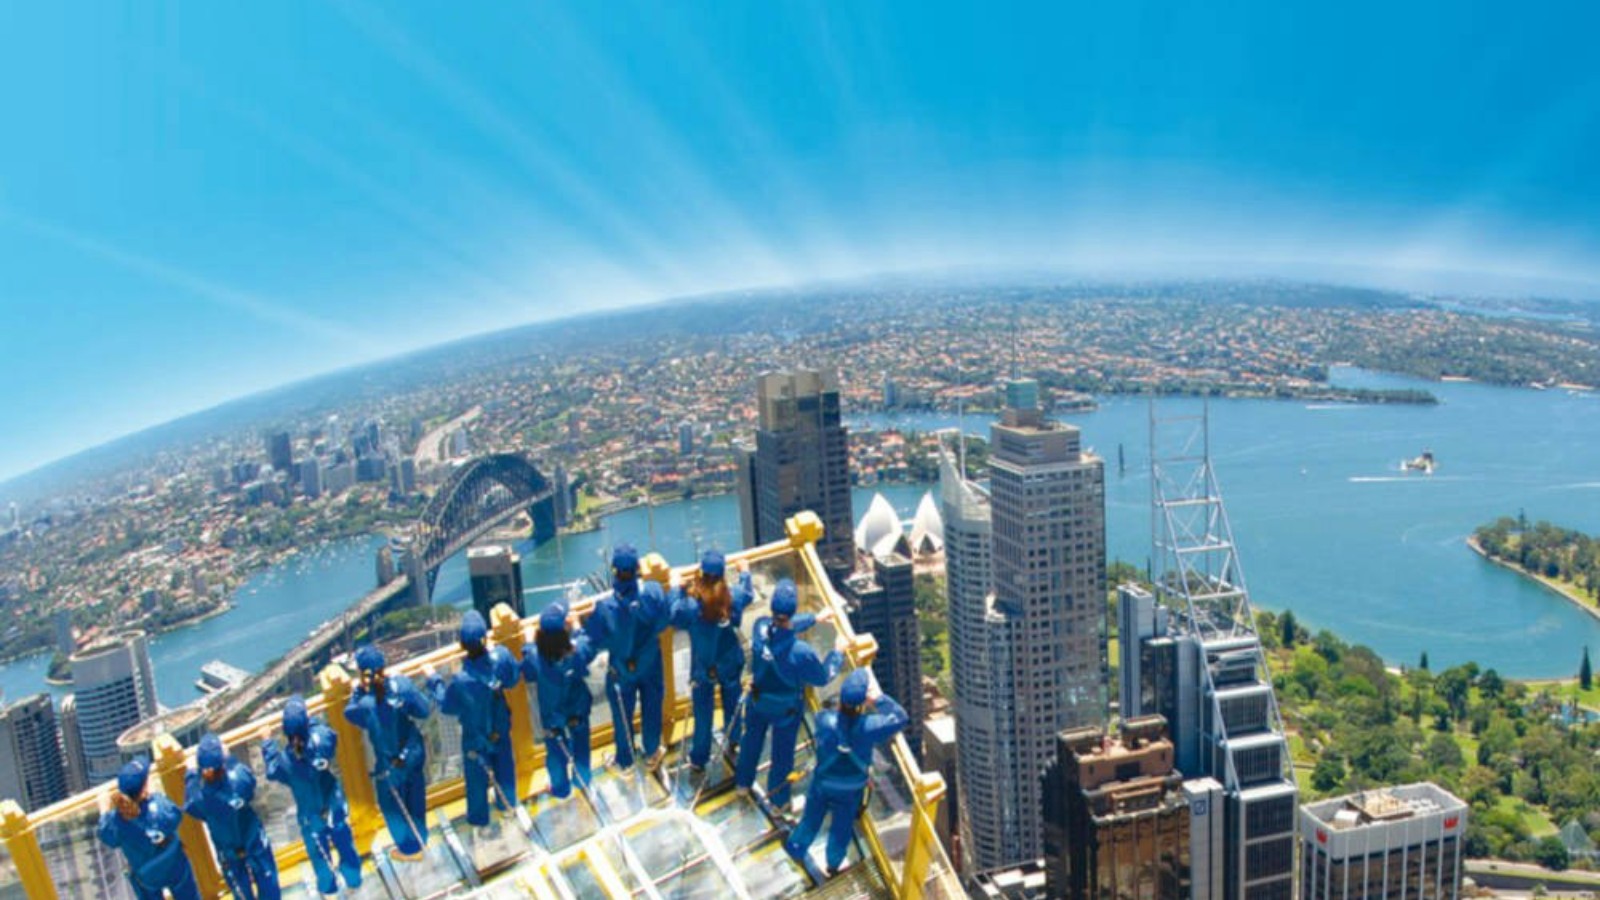 Sydney Tower SKYWALK Tour - see more...